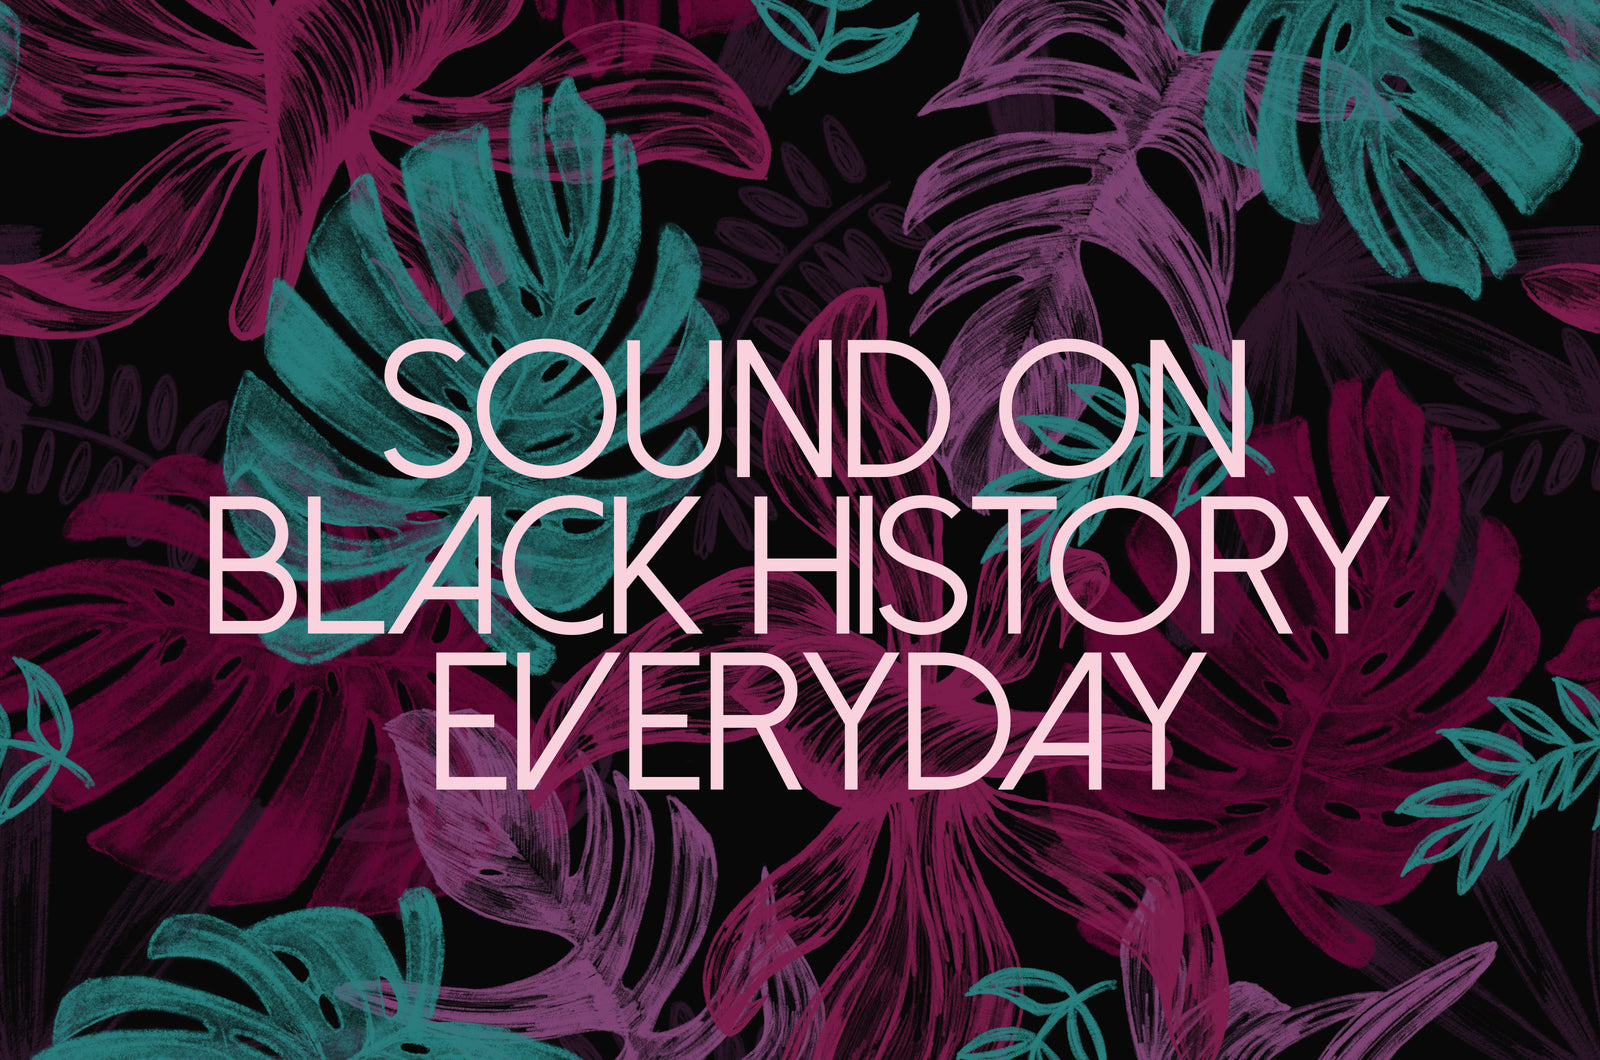 Sound On - Black History Everyday!